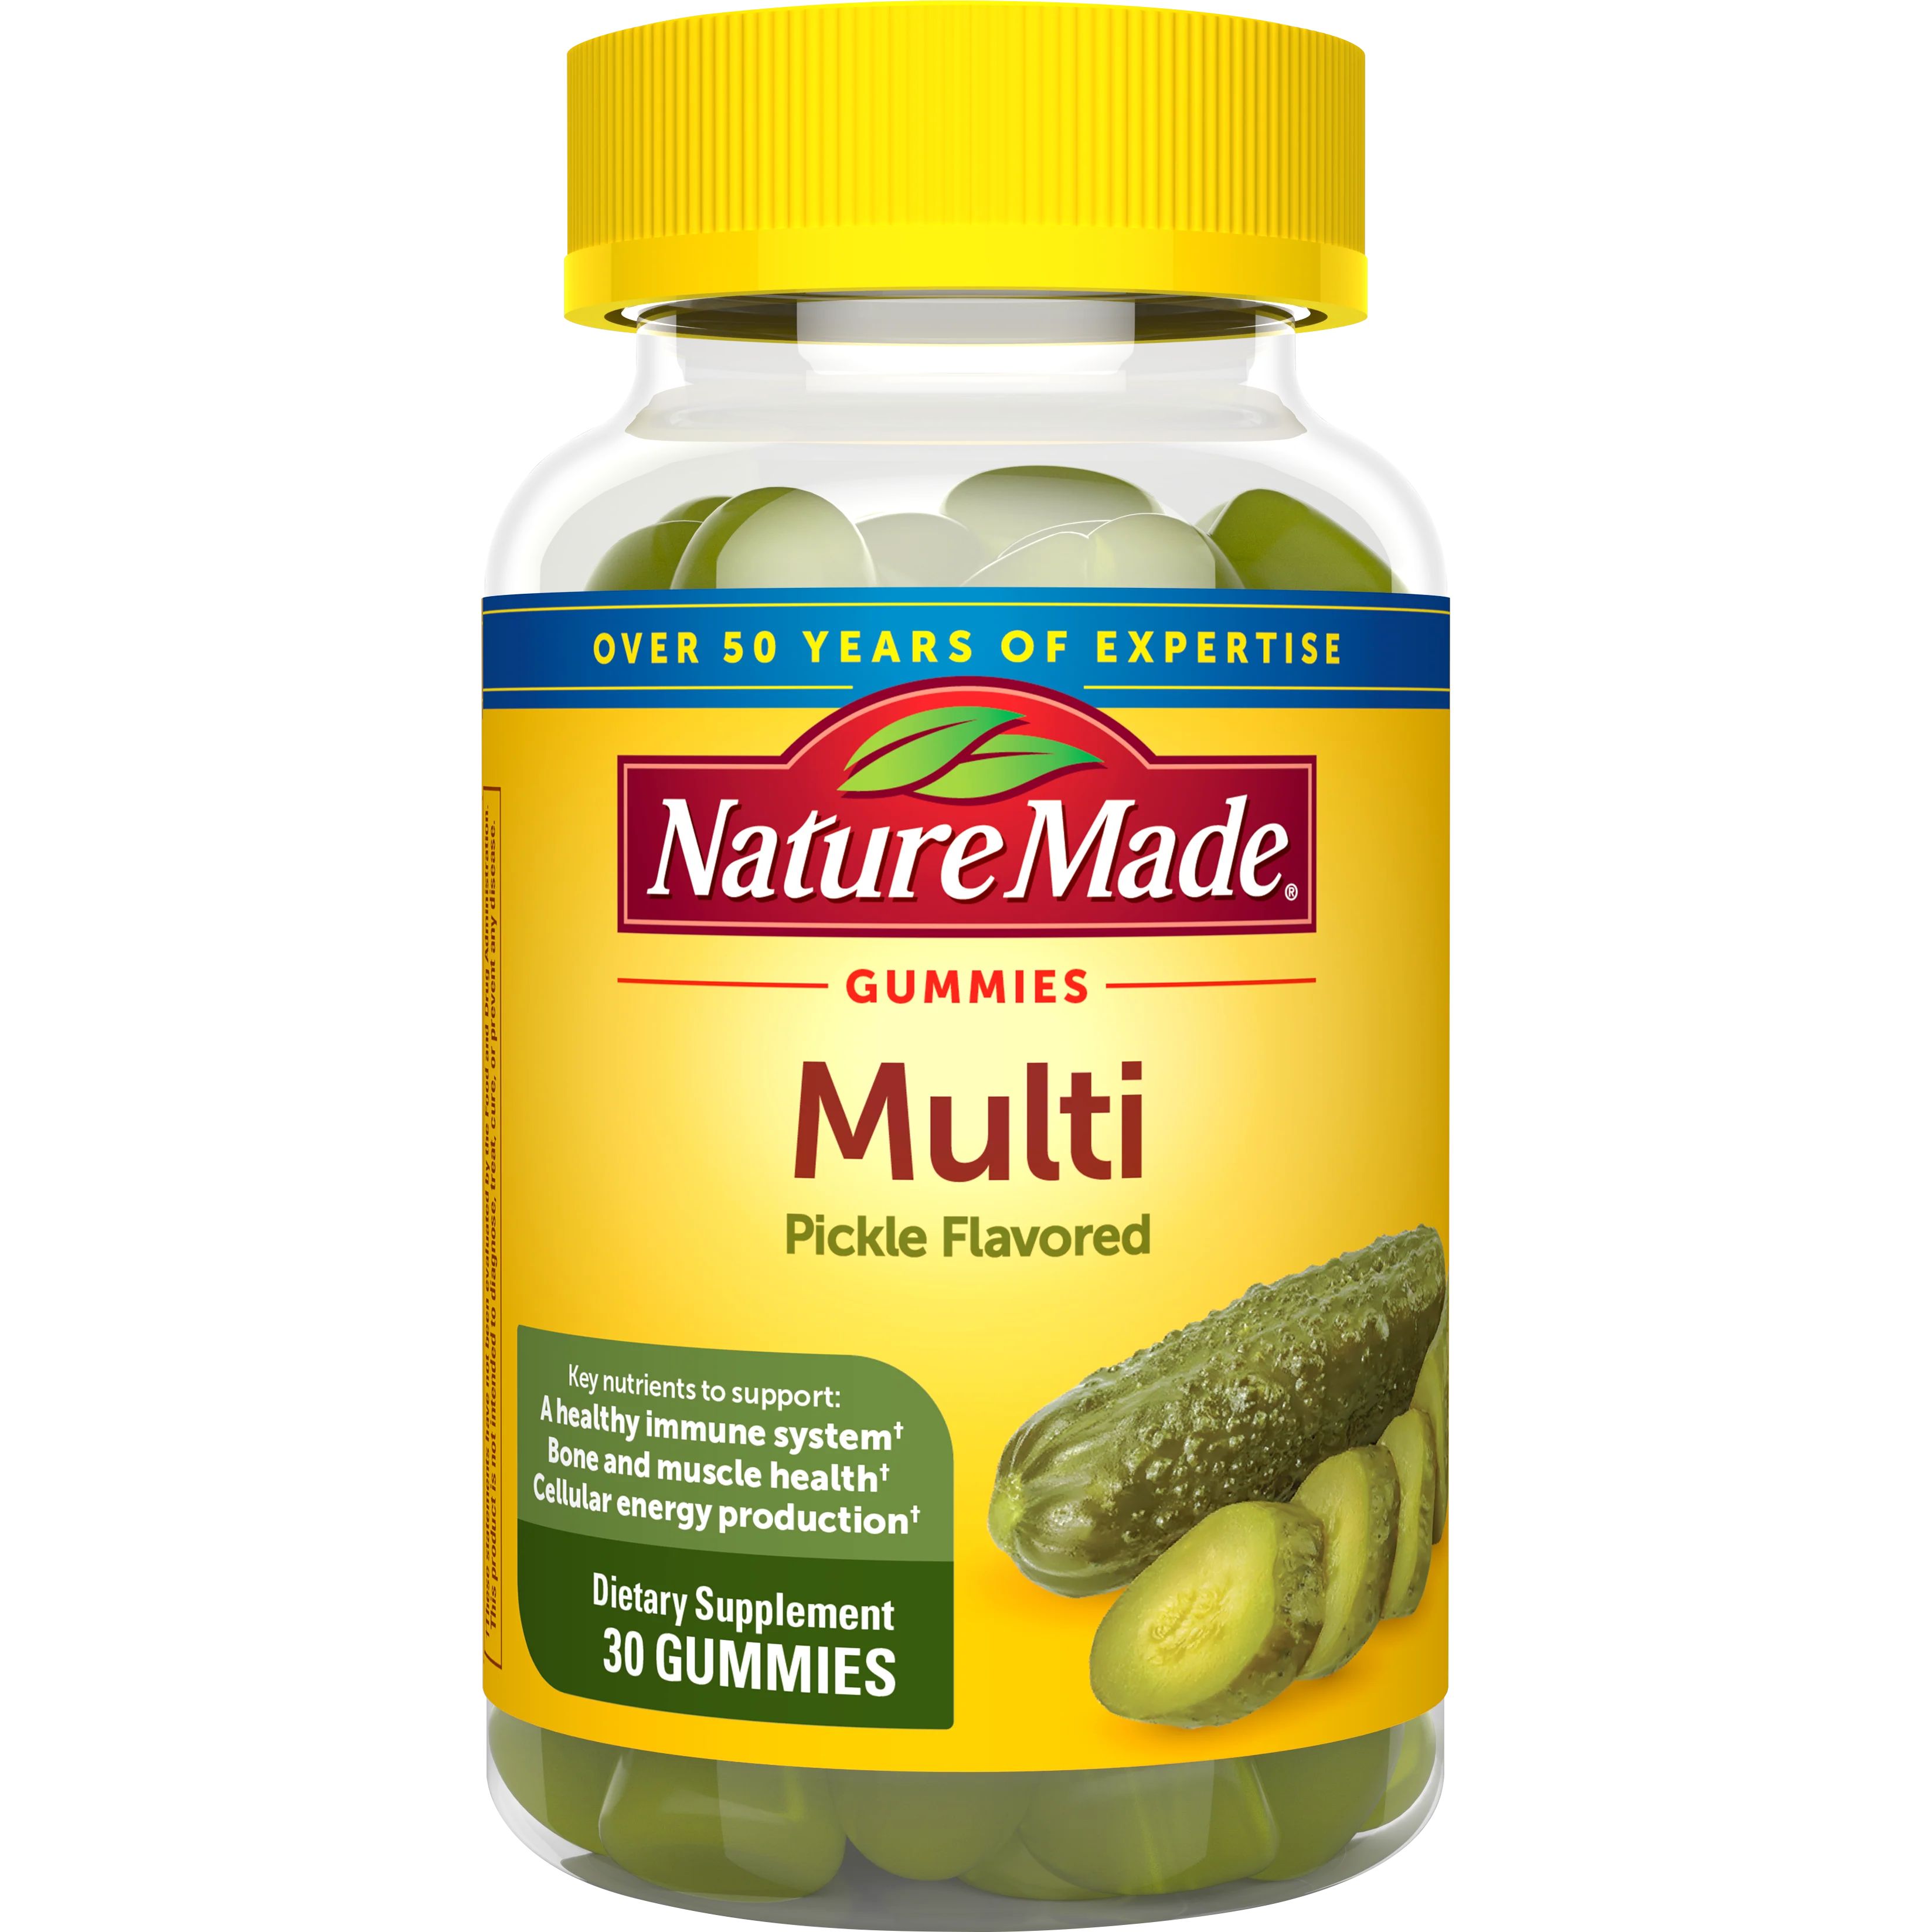 Pickle Flavored Multivitamin Gummies | NatureMade